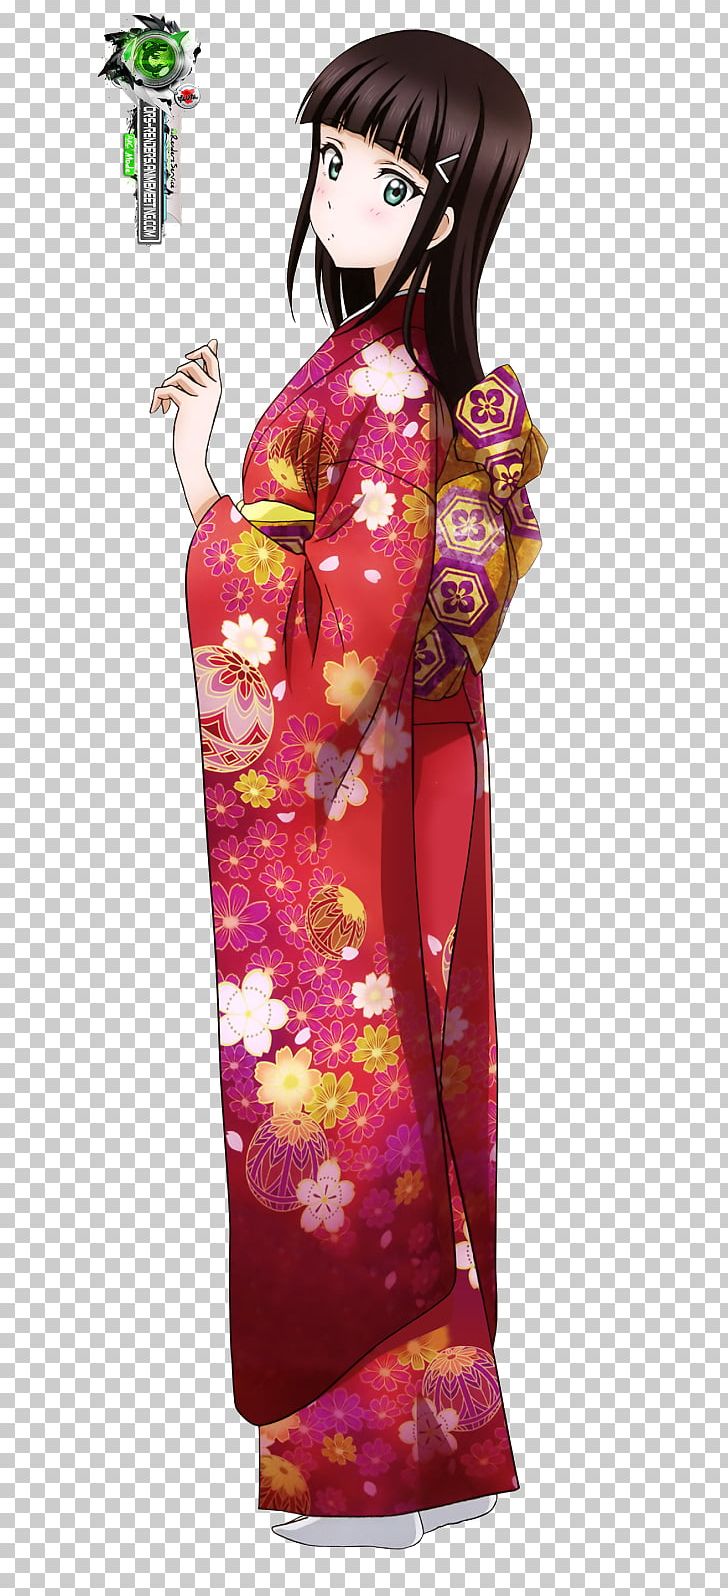 Kimono Clothing Dress Yukata Costume PNG, Clipart, Bathrobe, Clothing ...